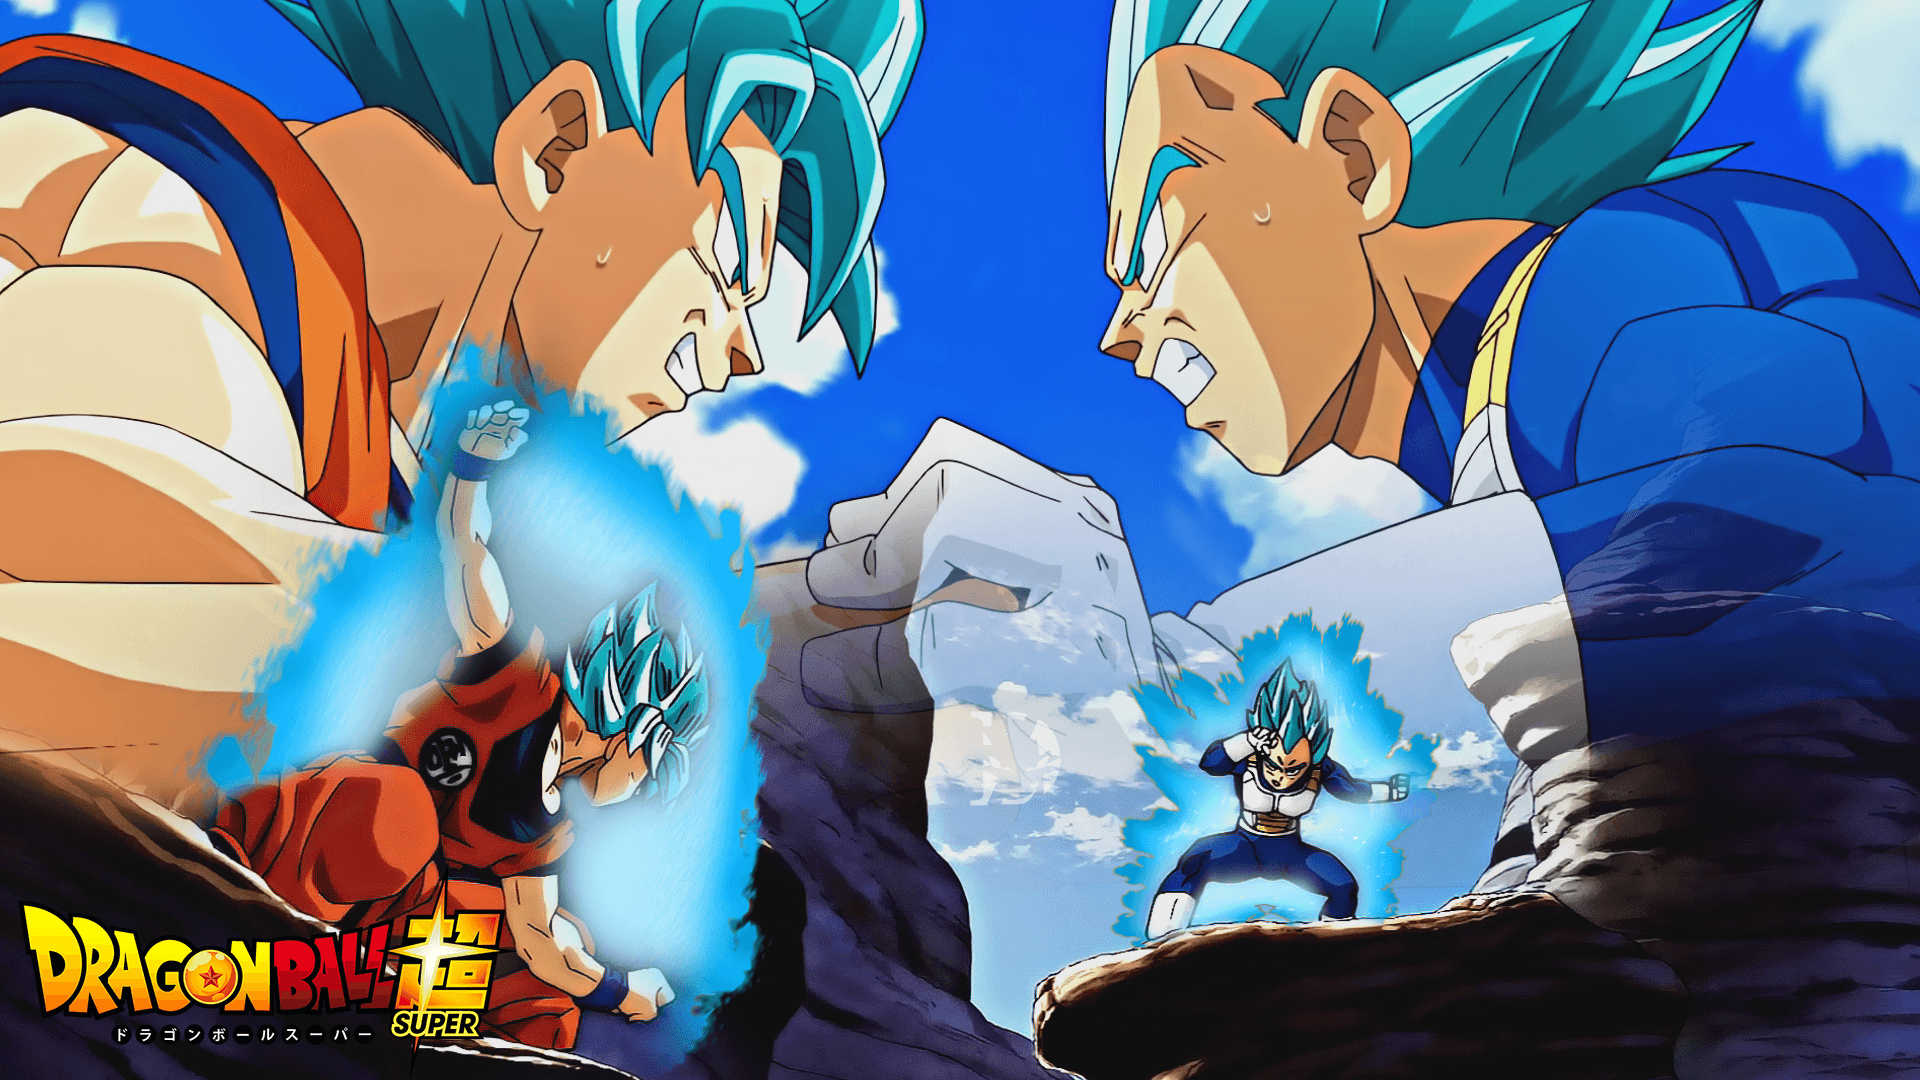 Goku Vs Vegeta 4k Wallpapers Top Free Goku Vs Vegeta 4k Backgrounds Wallpaperaccess 1405